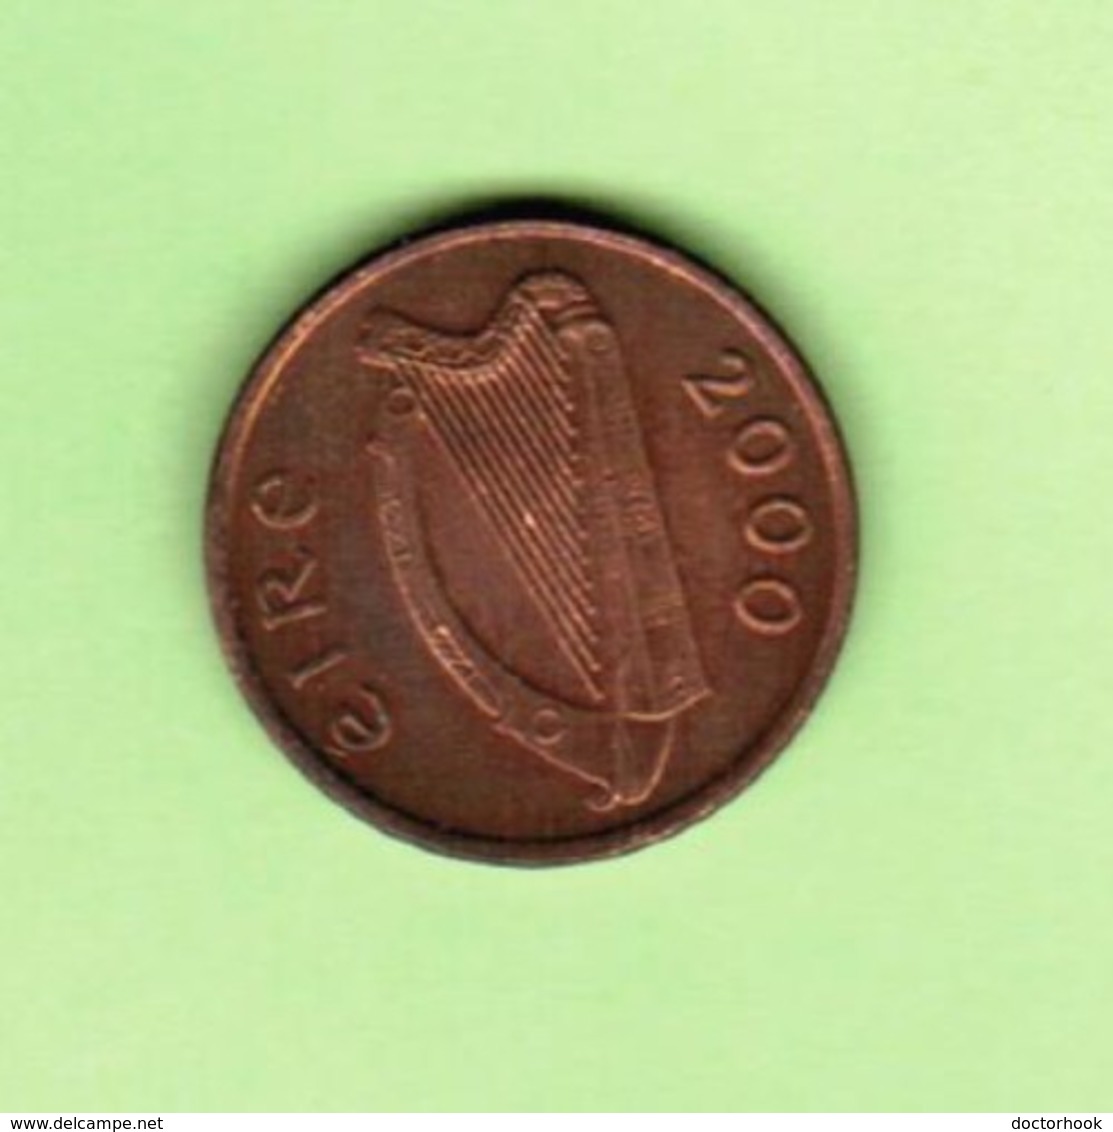 IRELAND   1 PENNY 2000  (KM # 20a) #5210 - Ireland